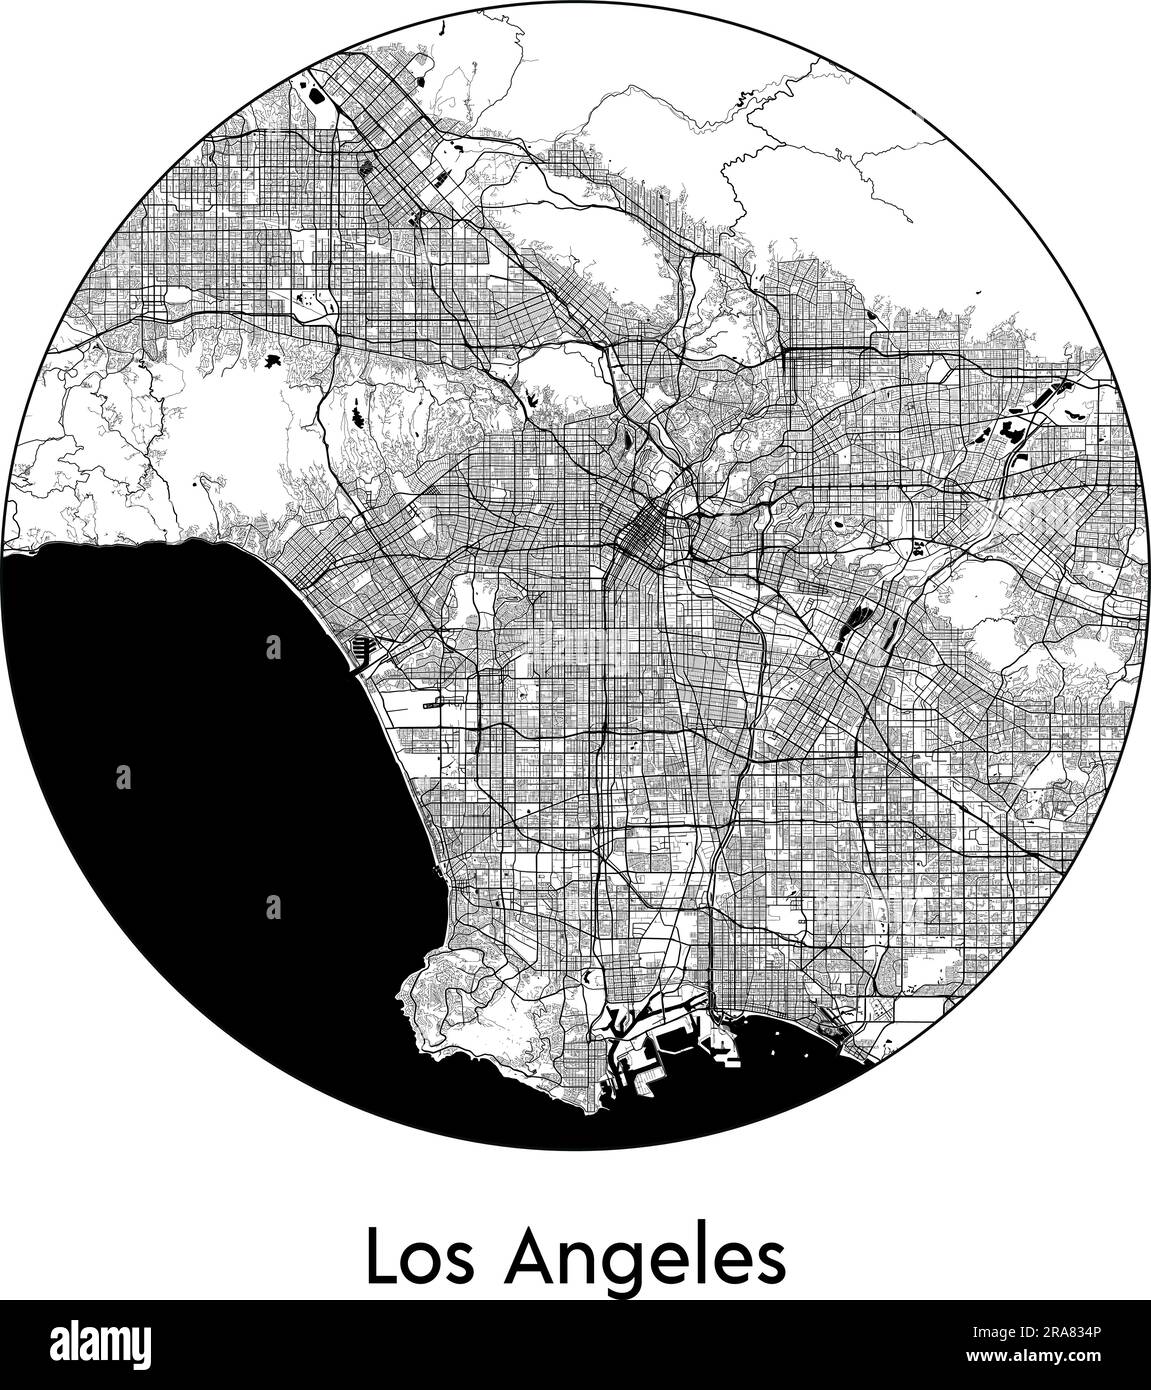 Stadtplan Los Angeles USA Nordamerika Vektordarstellung schwarz weiß Stock Vektor